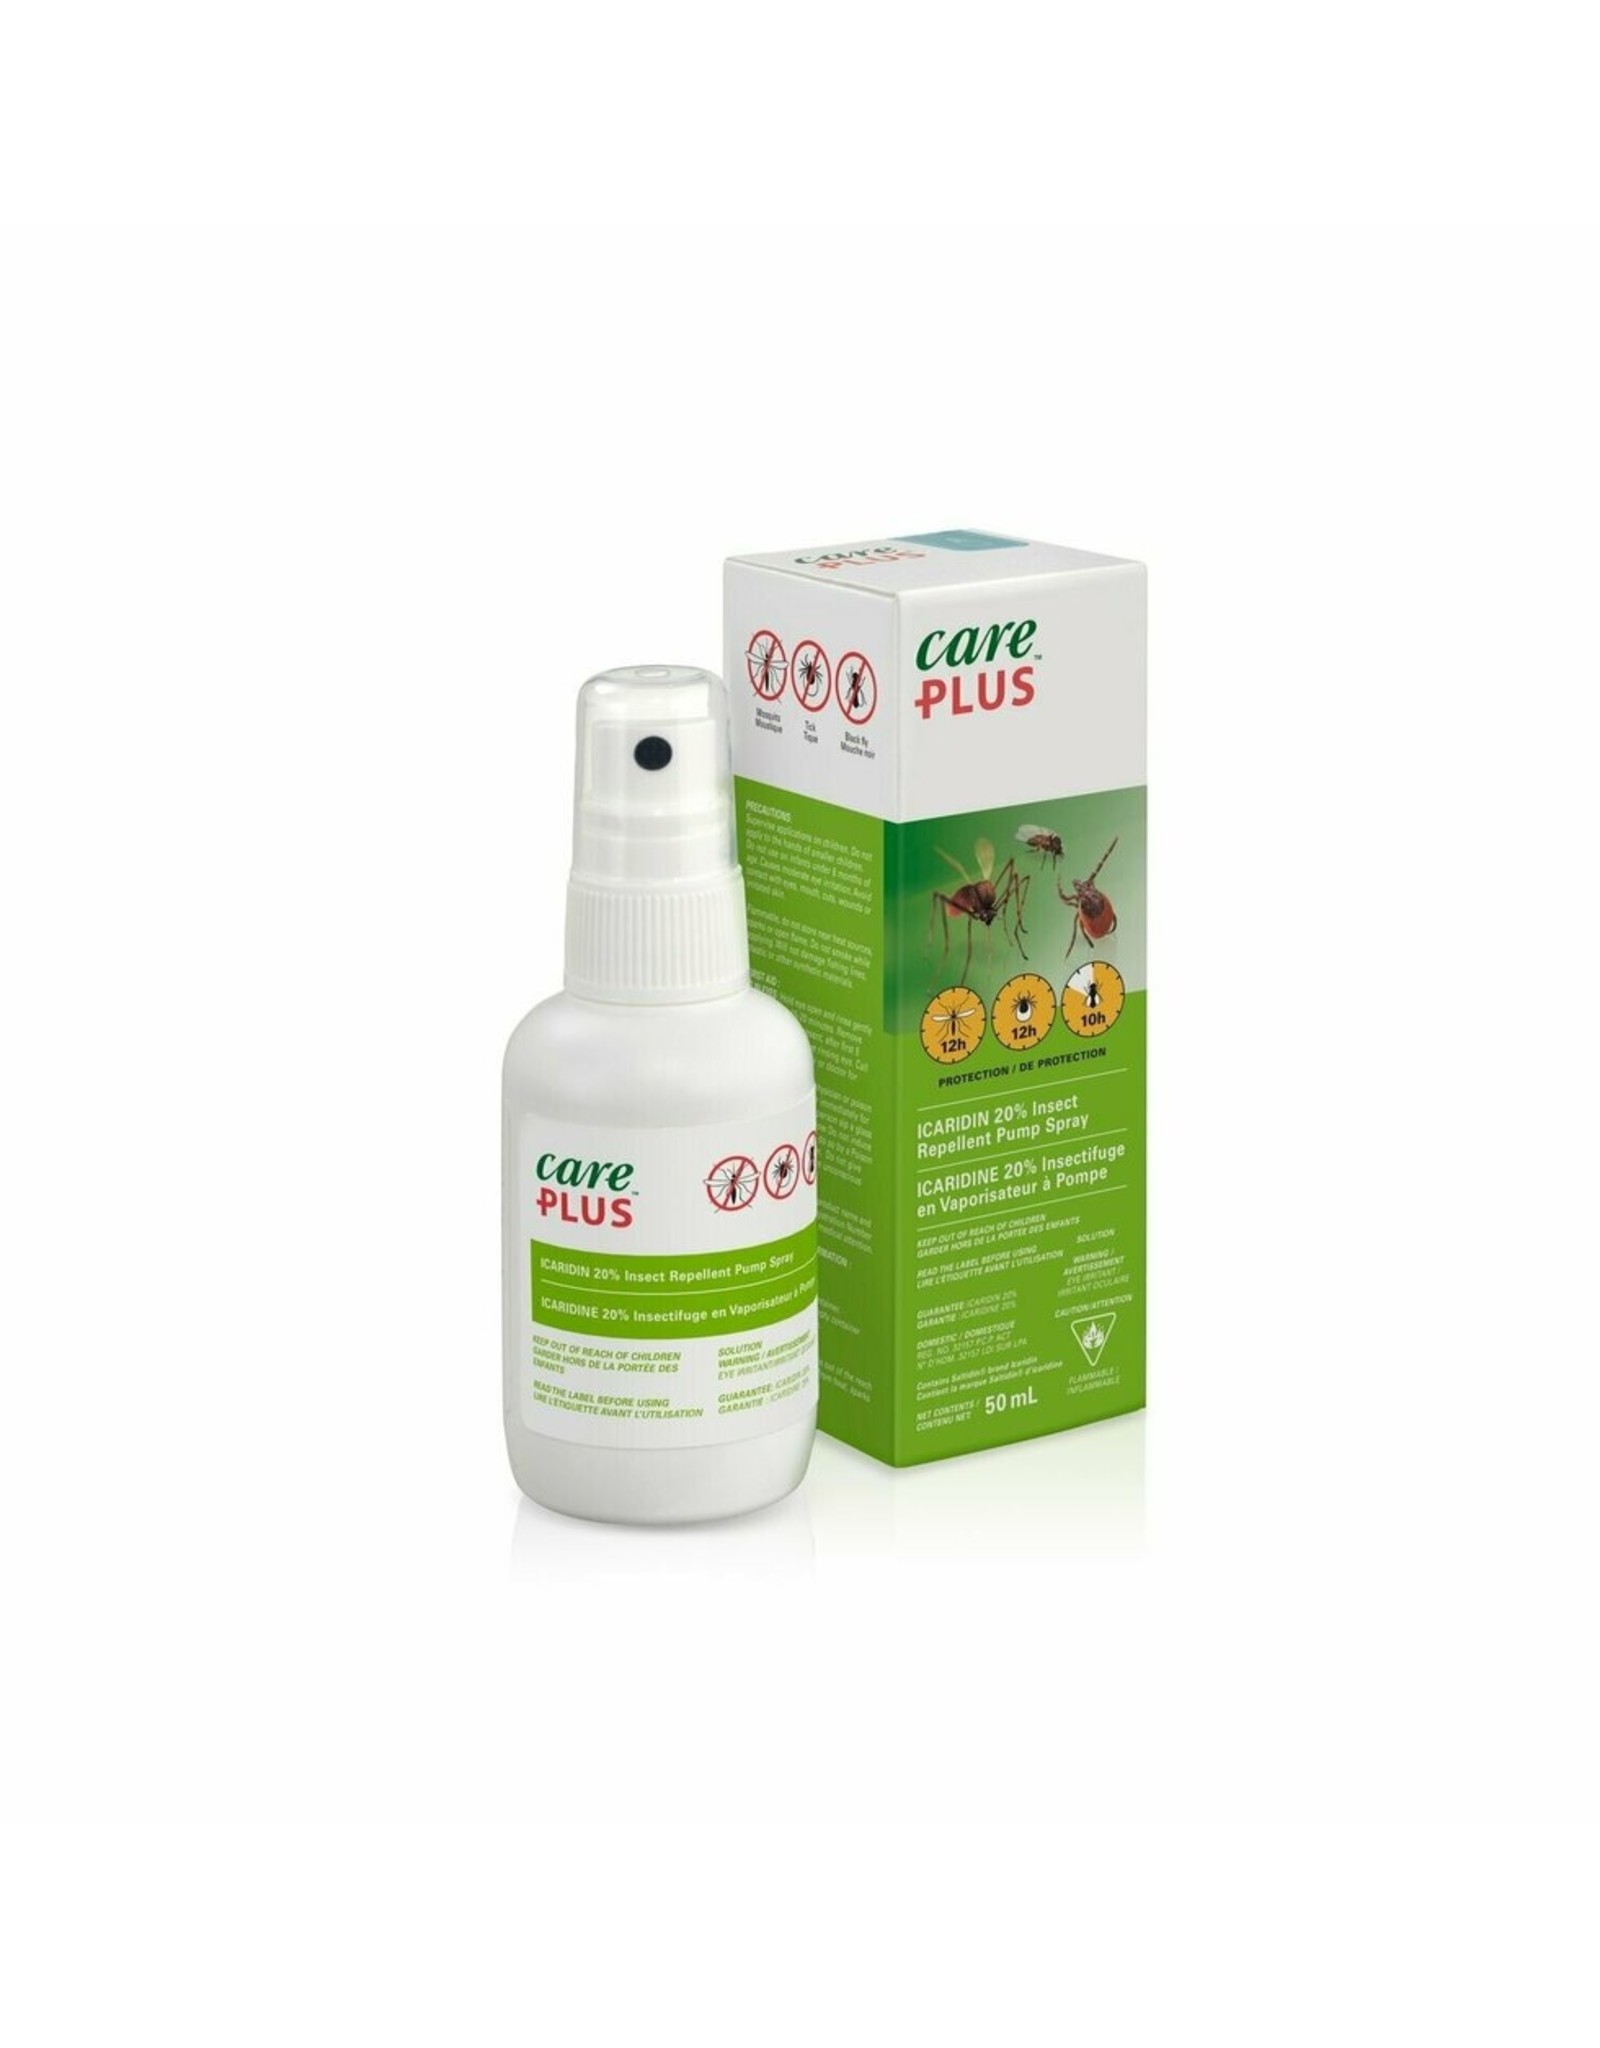 Care Plus Care Plus Insect Repellent 20% 50ml